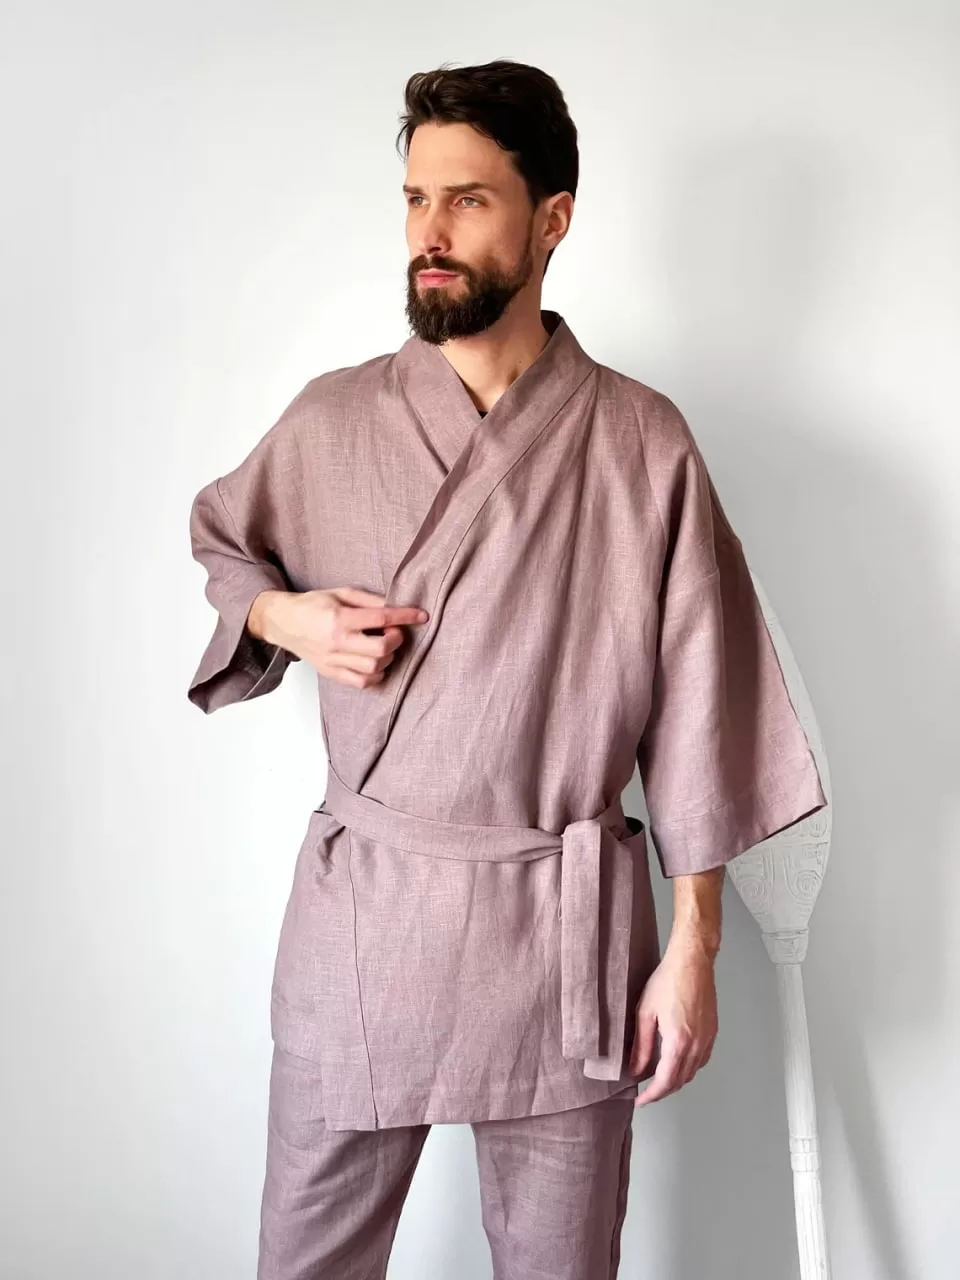 Guy in kimono  Kimono, Short kimono, Linen kimono